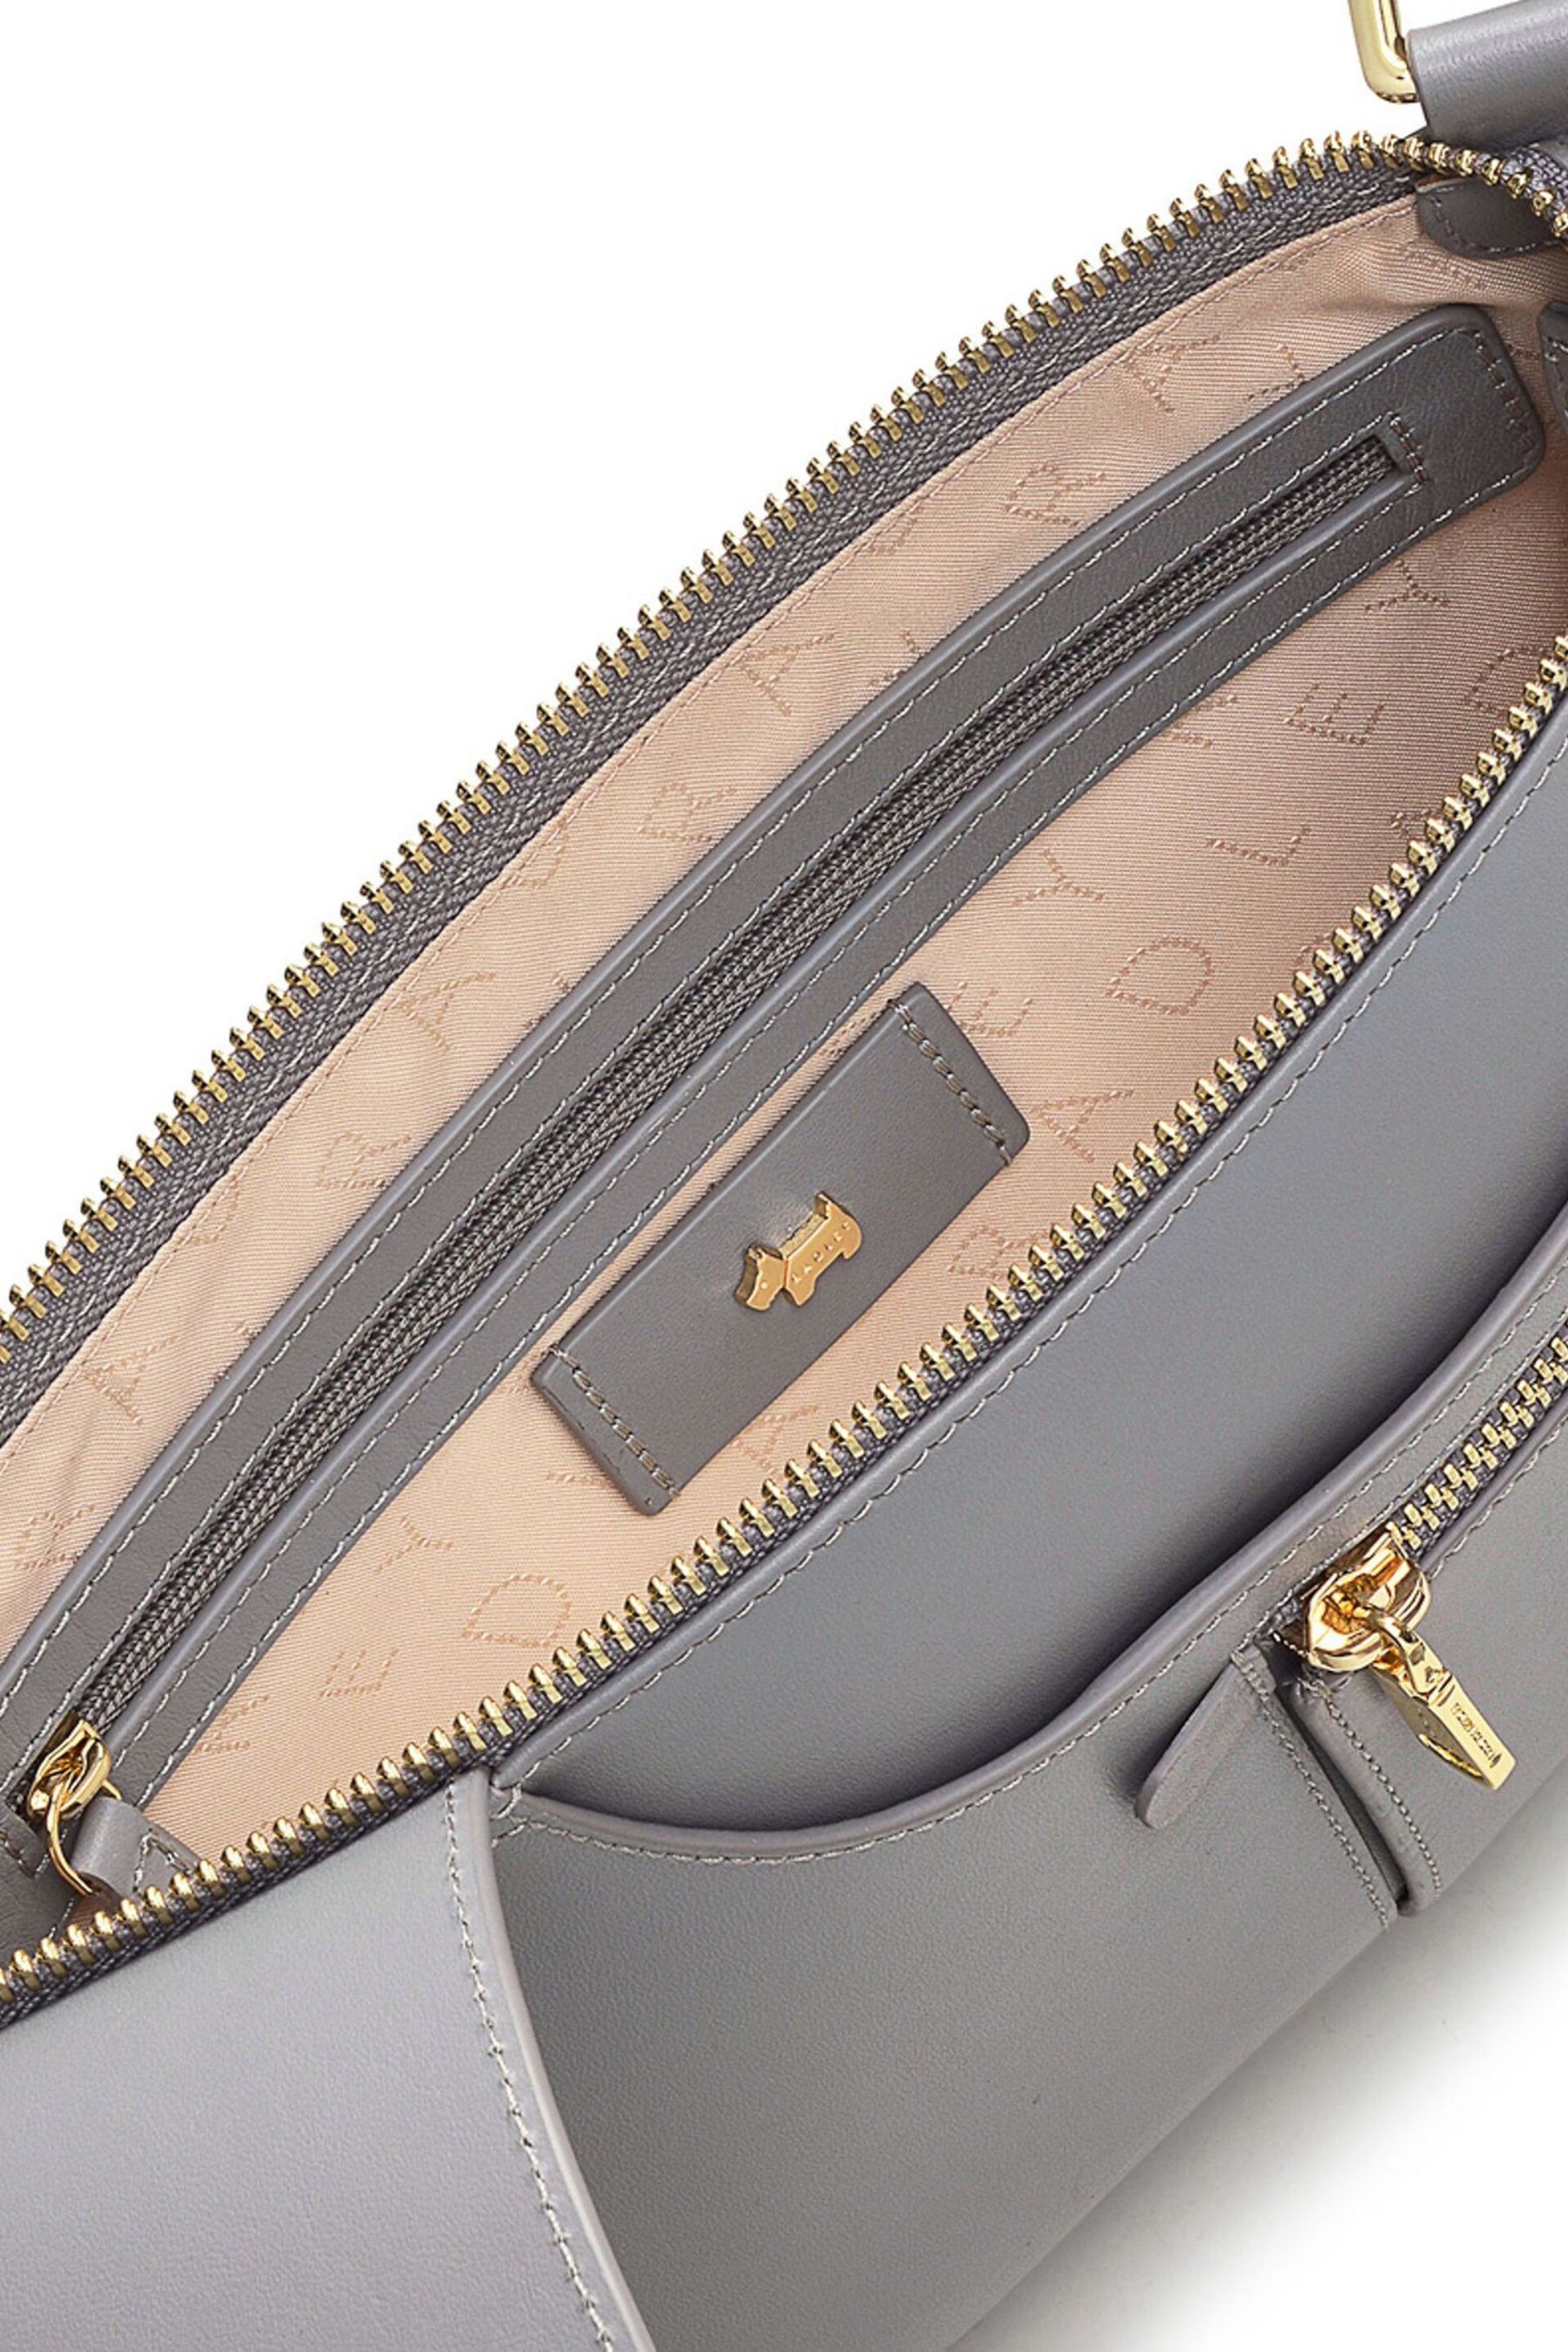 Radley London Grey Pockets Icon Small Zip-Top Cross-Body Bag - Image 5 of 5